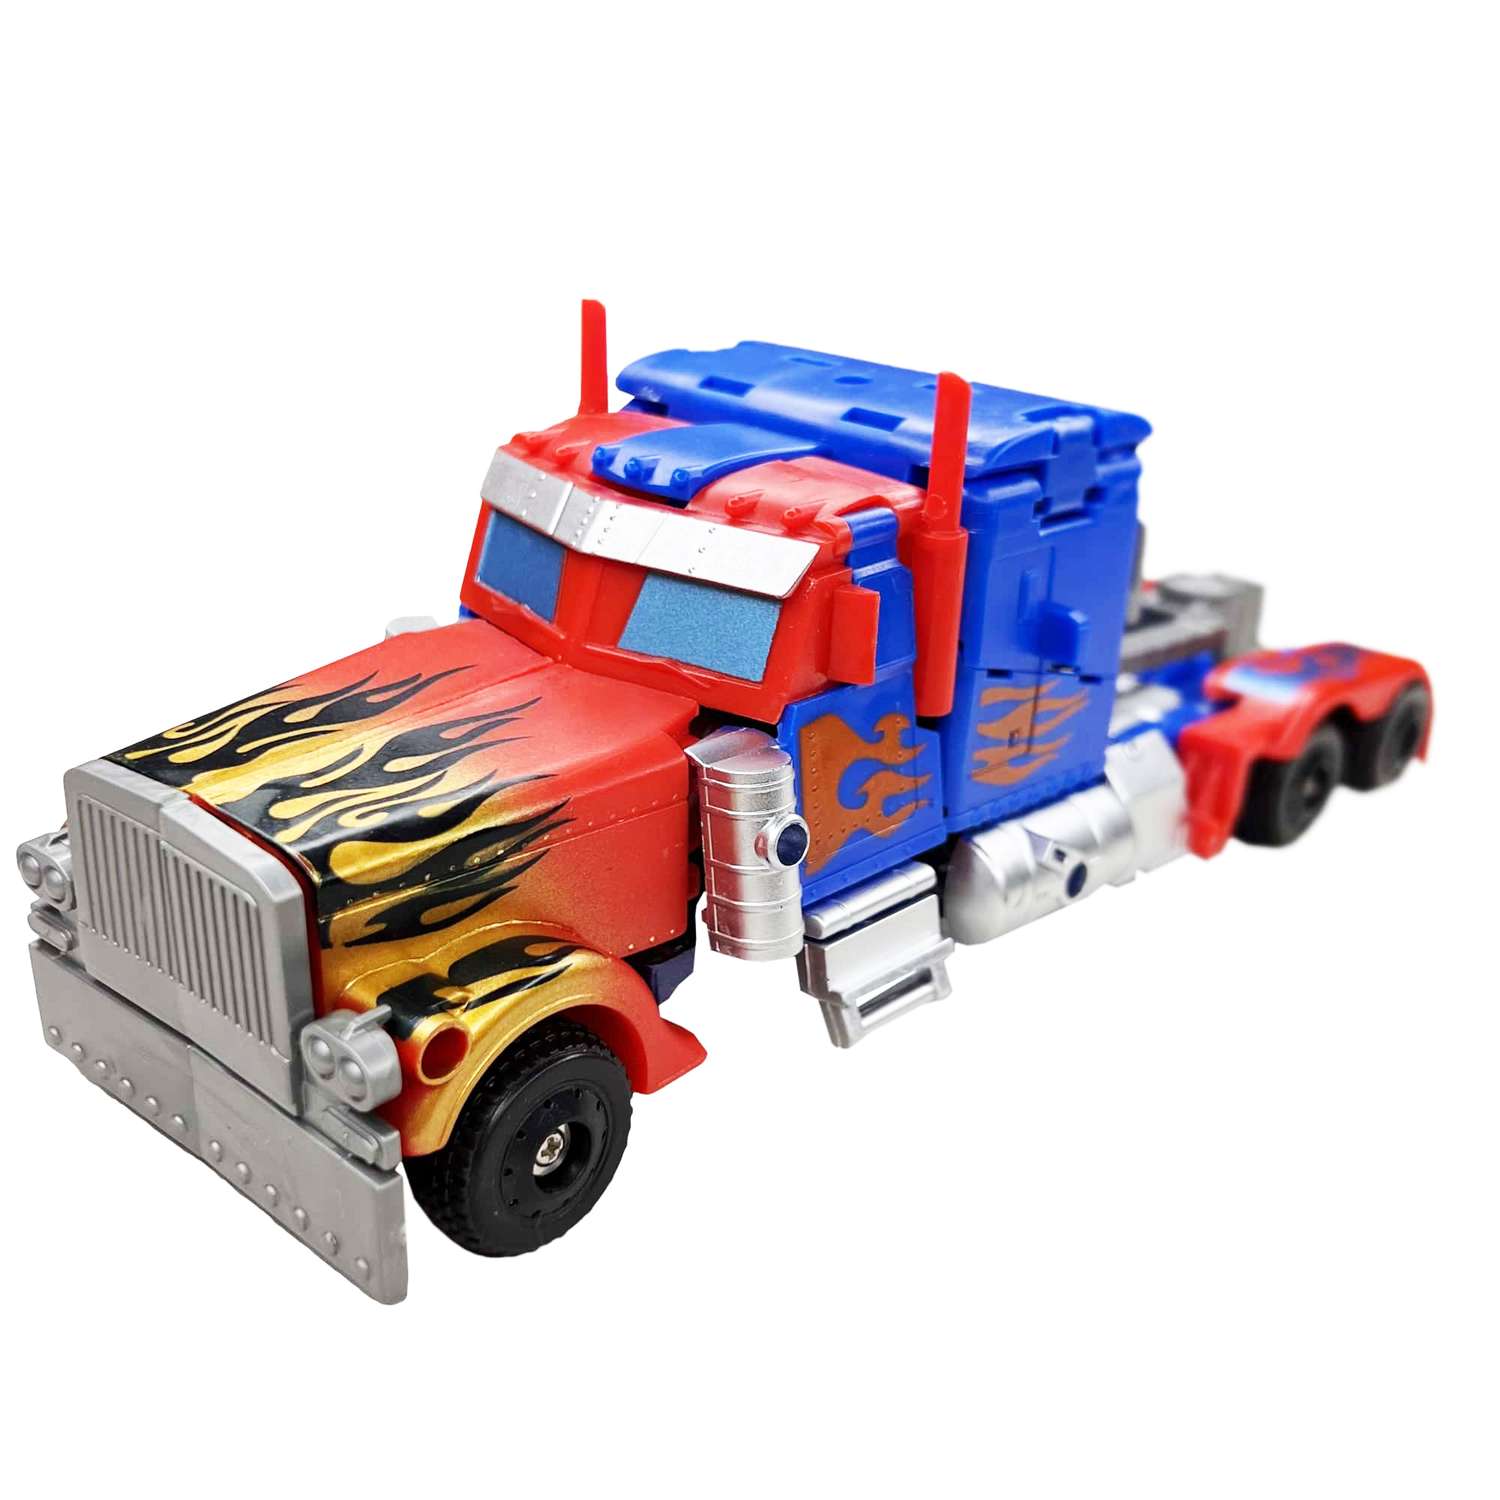 Трансформер робот BalaToys Оптимус прайм грузовик 2 в 1 - фото 2